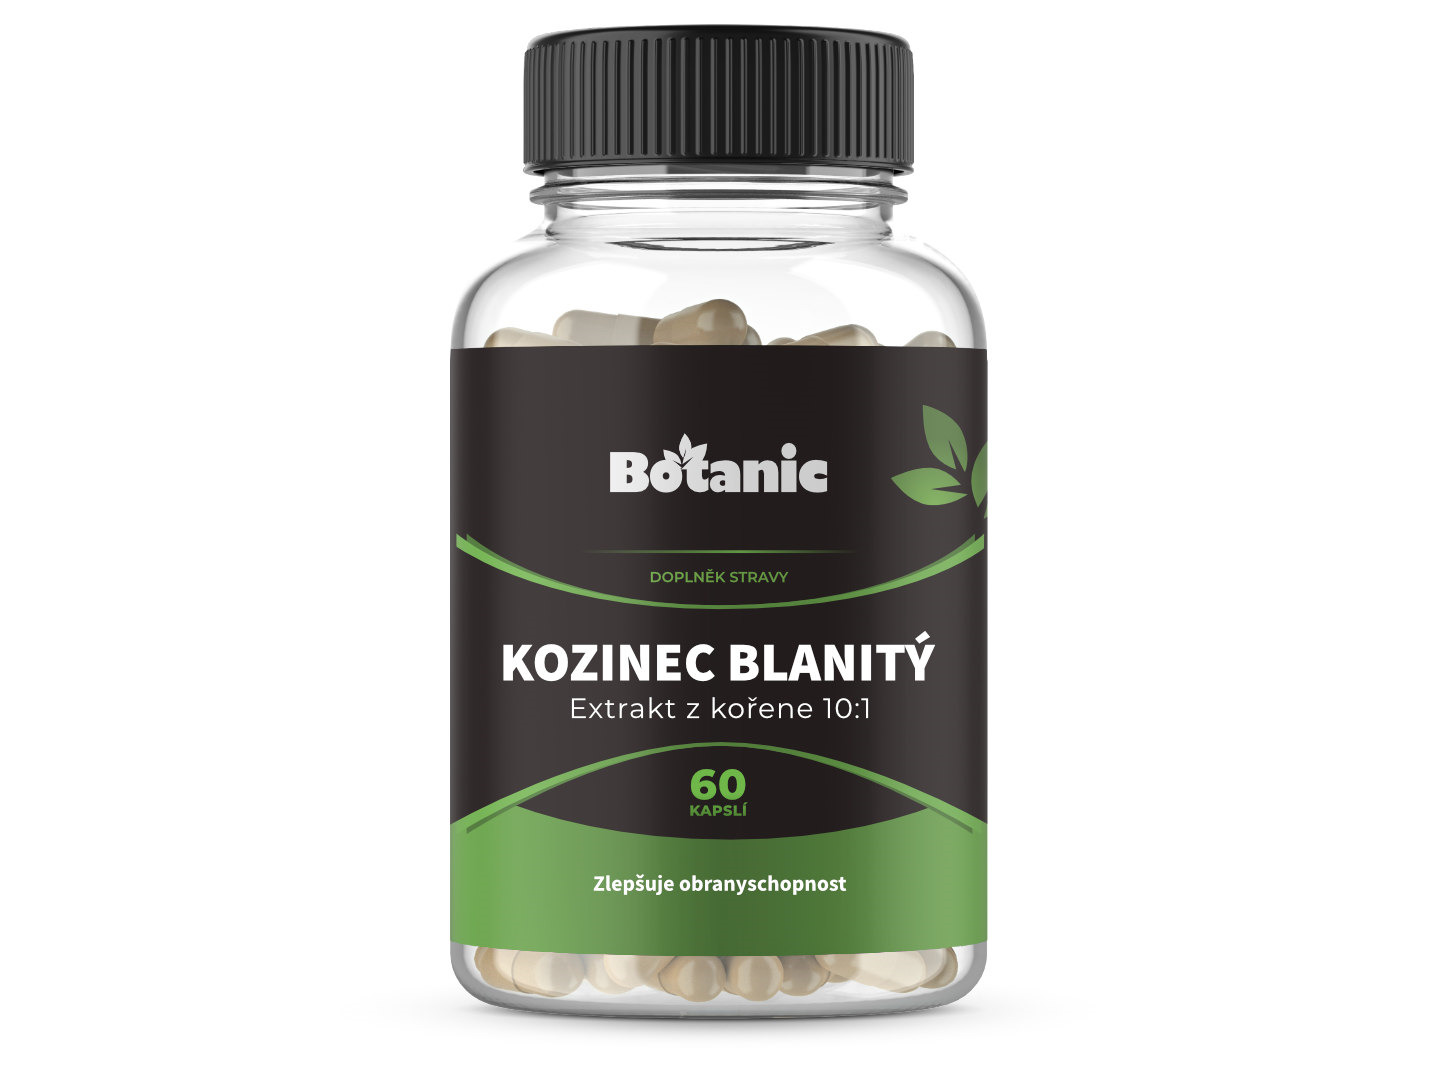 Botanic Kozinec blanitý - Extrakt z kořene 10:1 60kap.